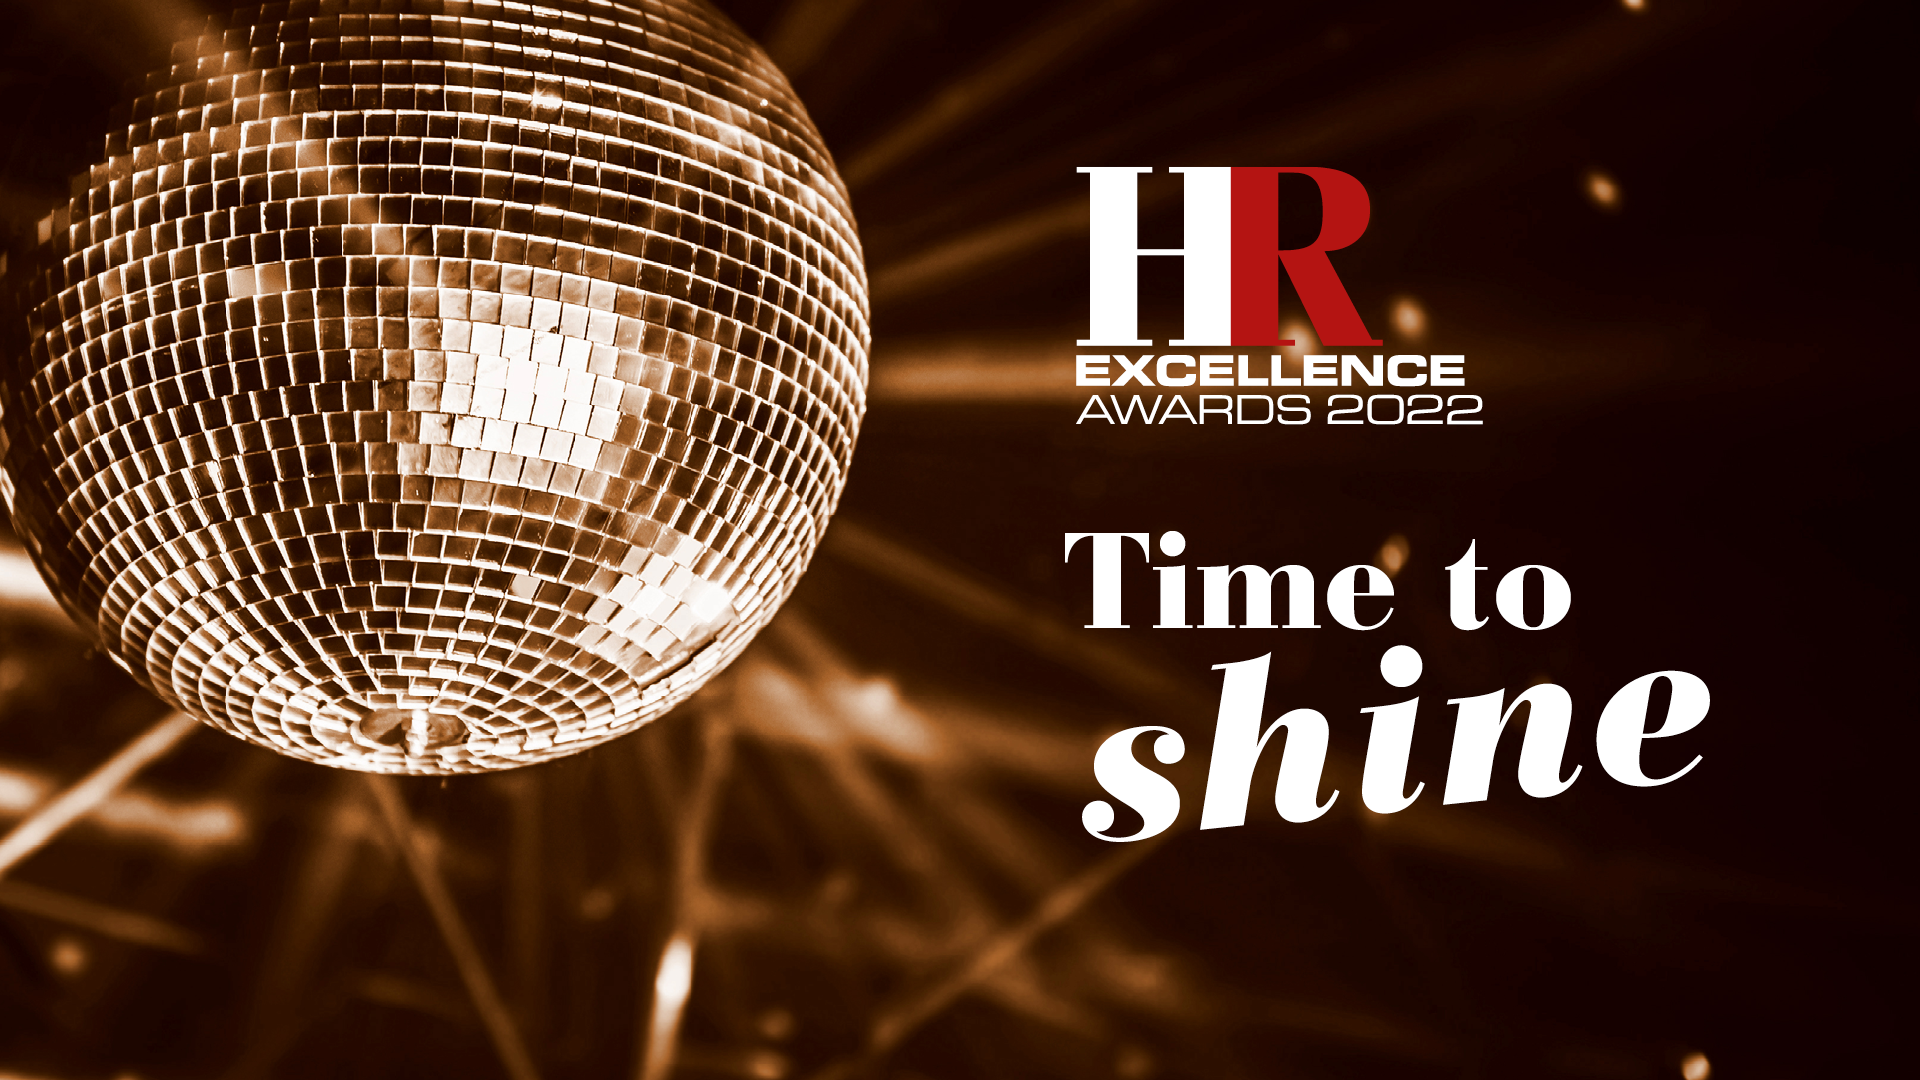 HR Excellence Awards 2022 Hero Imagev22